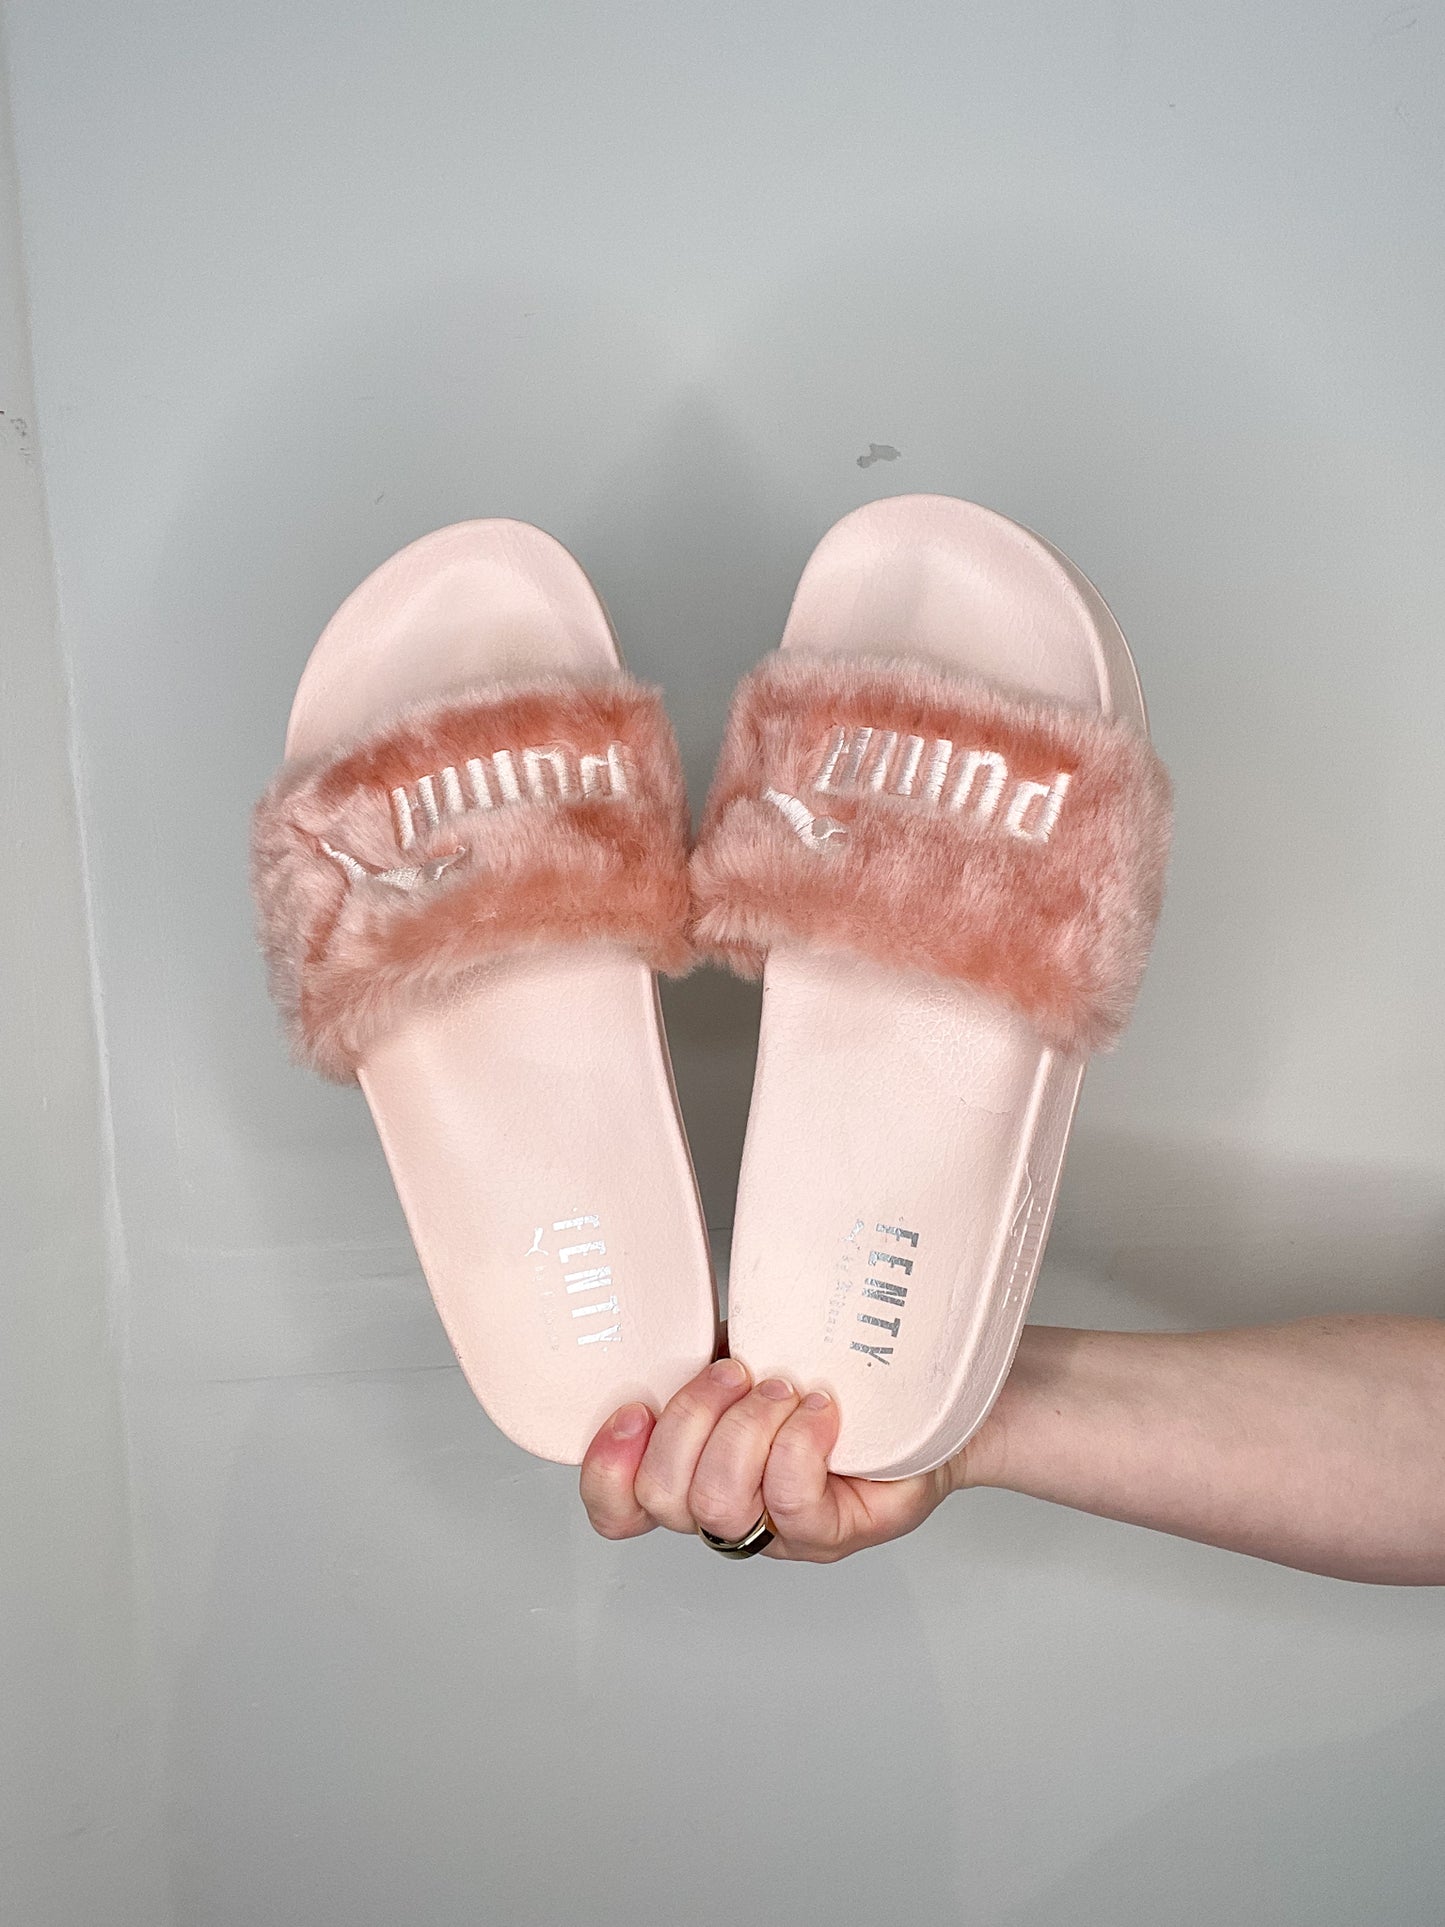 Fenty X Puma Light Pink Fuzzy Slide Shoes - Size 9